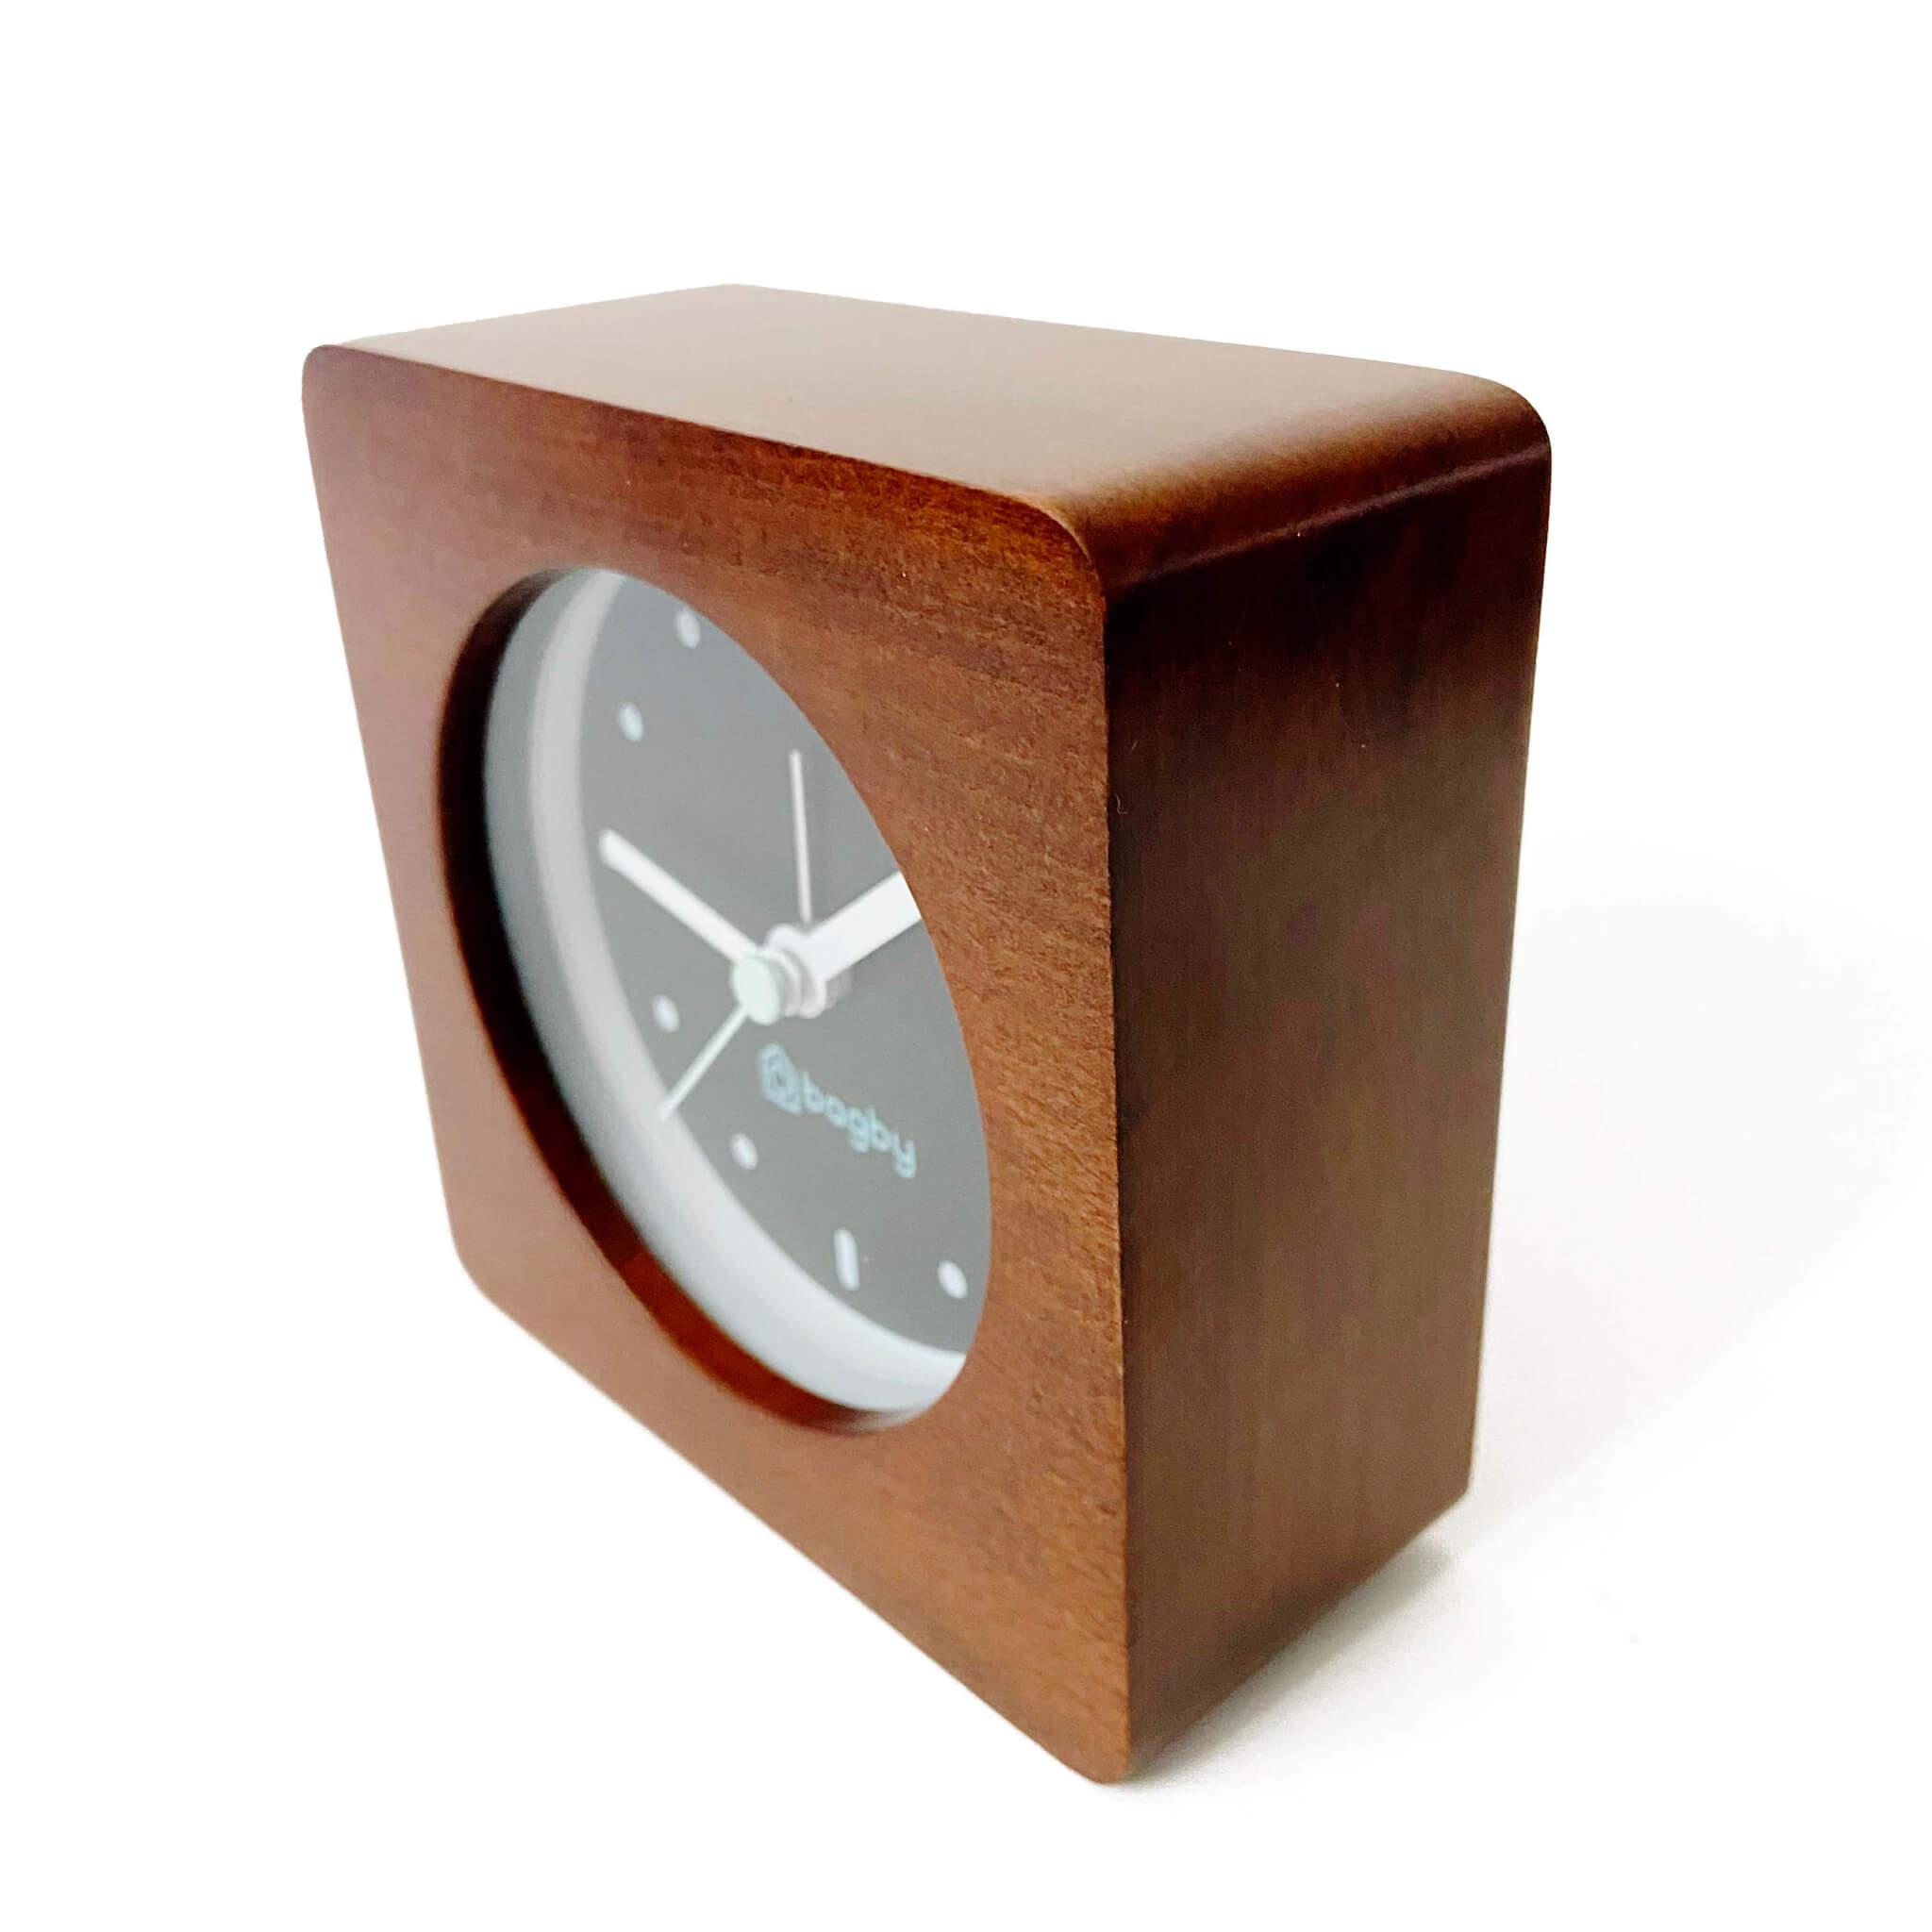 Bagby Minimalist Silent Digital-Free Alarm Clock Chestnut